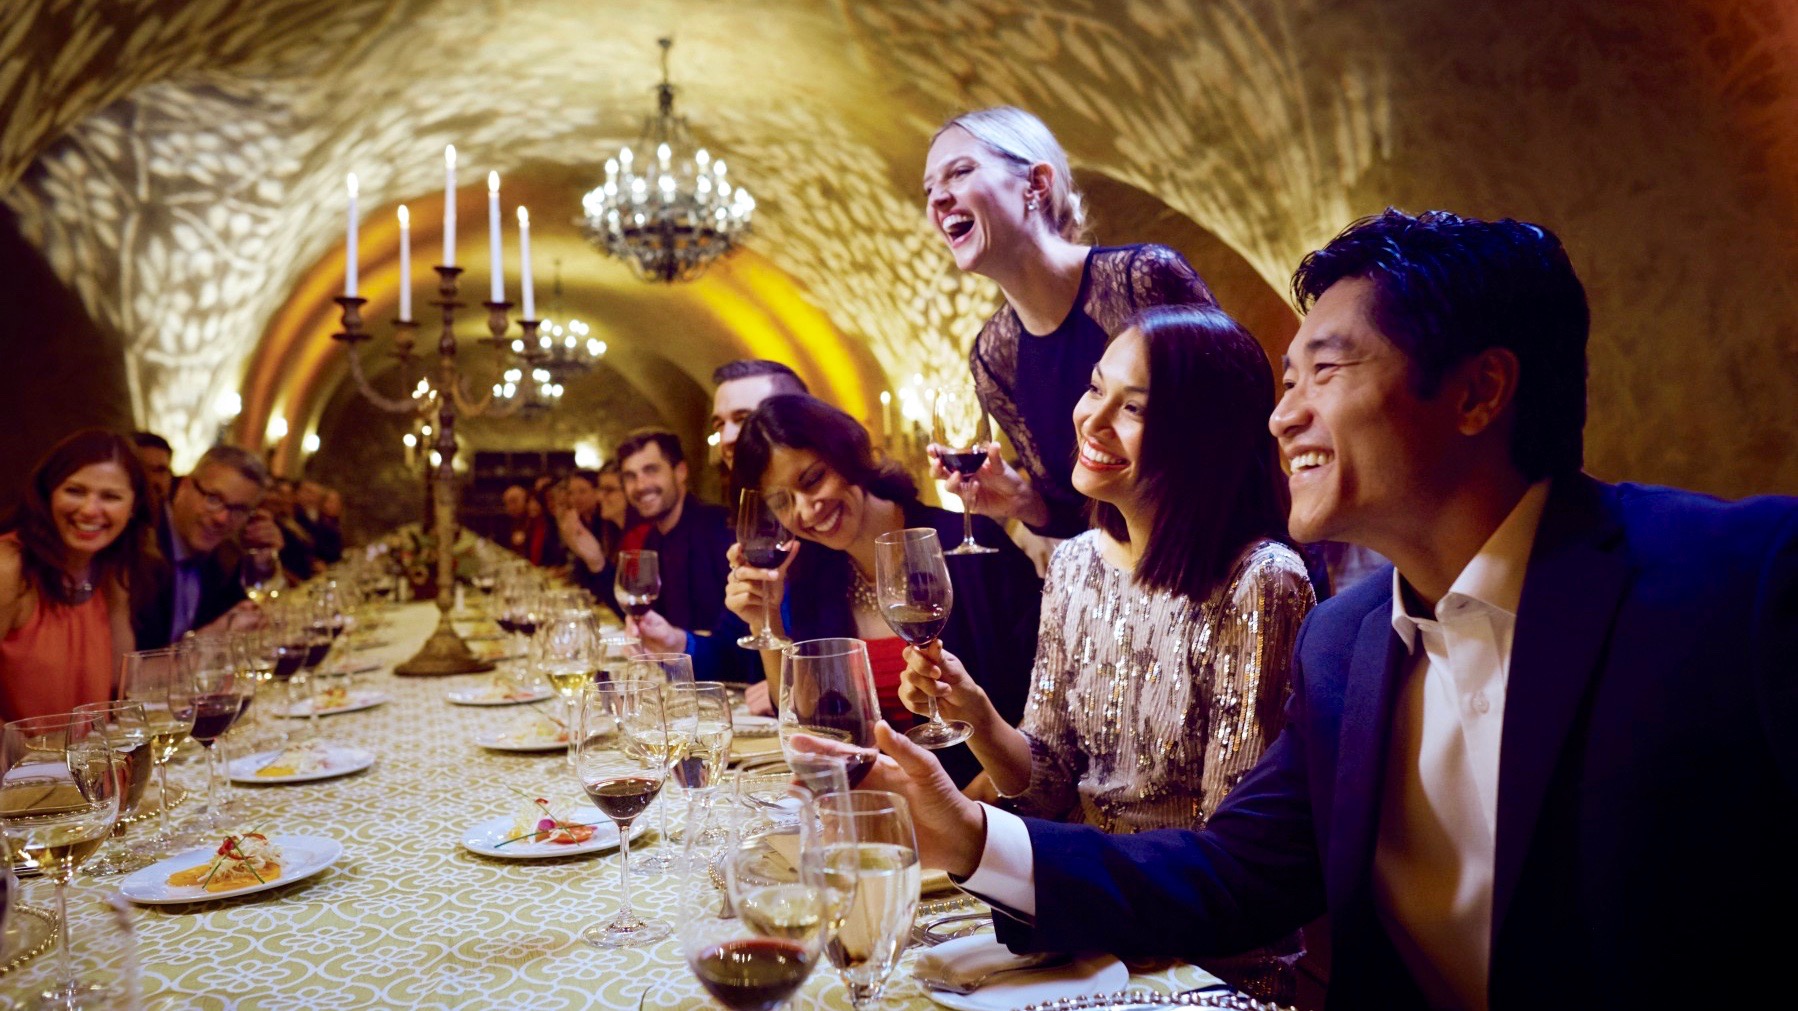 2017 Masters Winemaker Dinner Series at Napa's Meritage Resort, Healthy Living + Travel